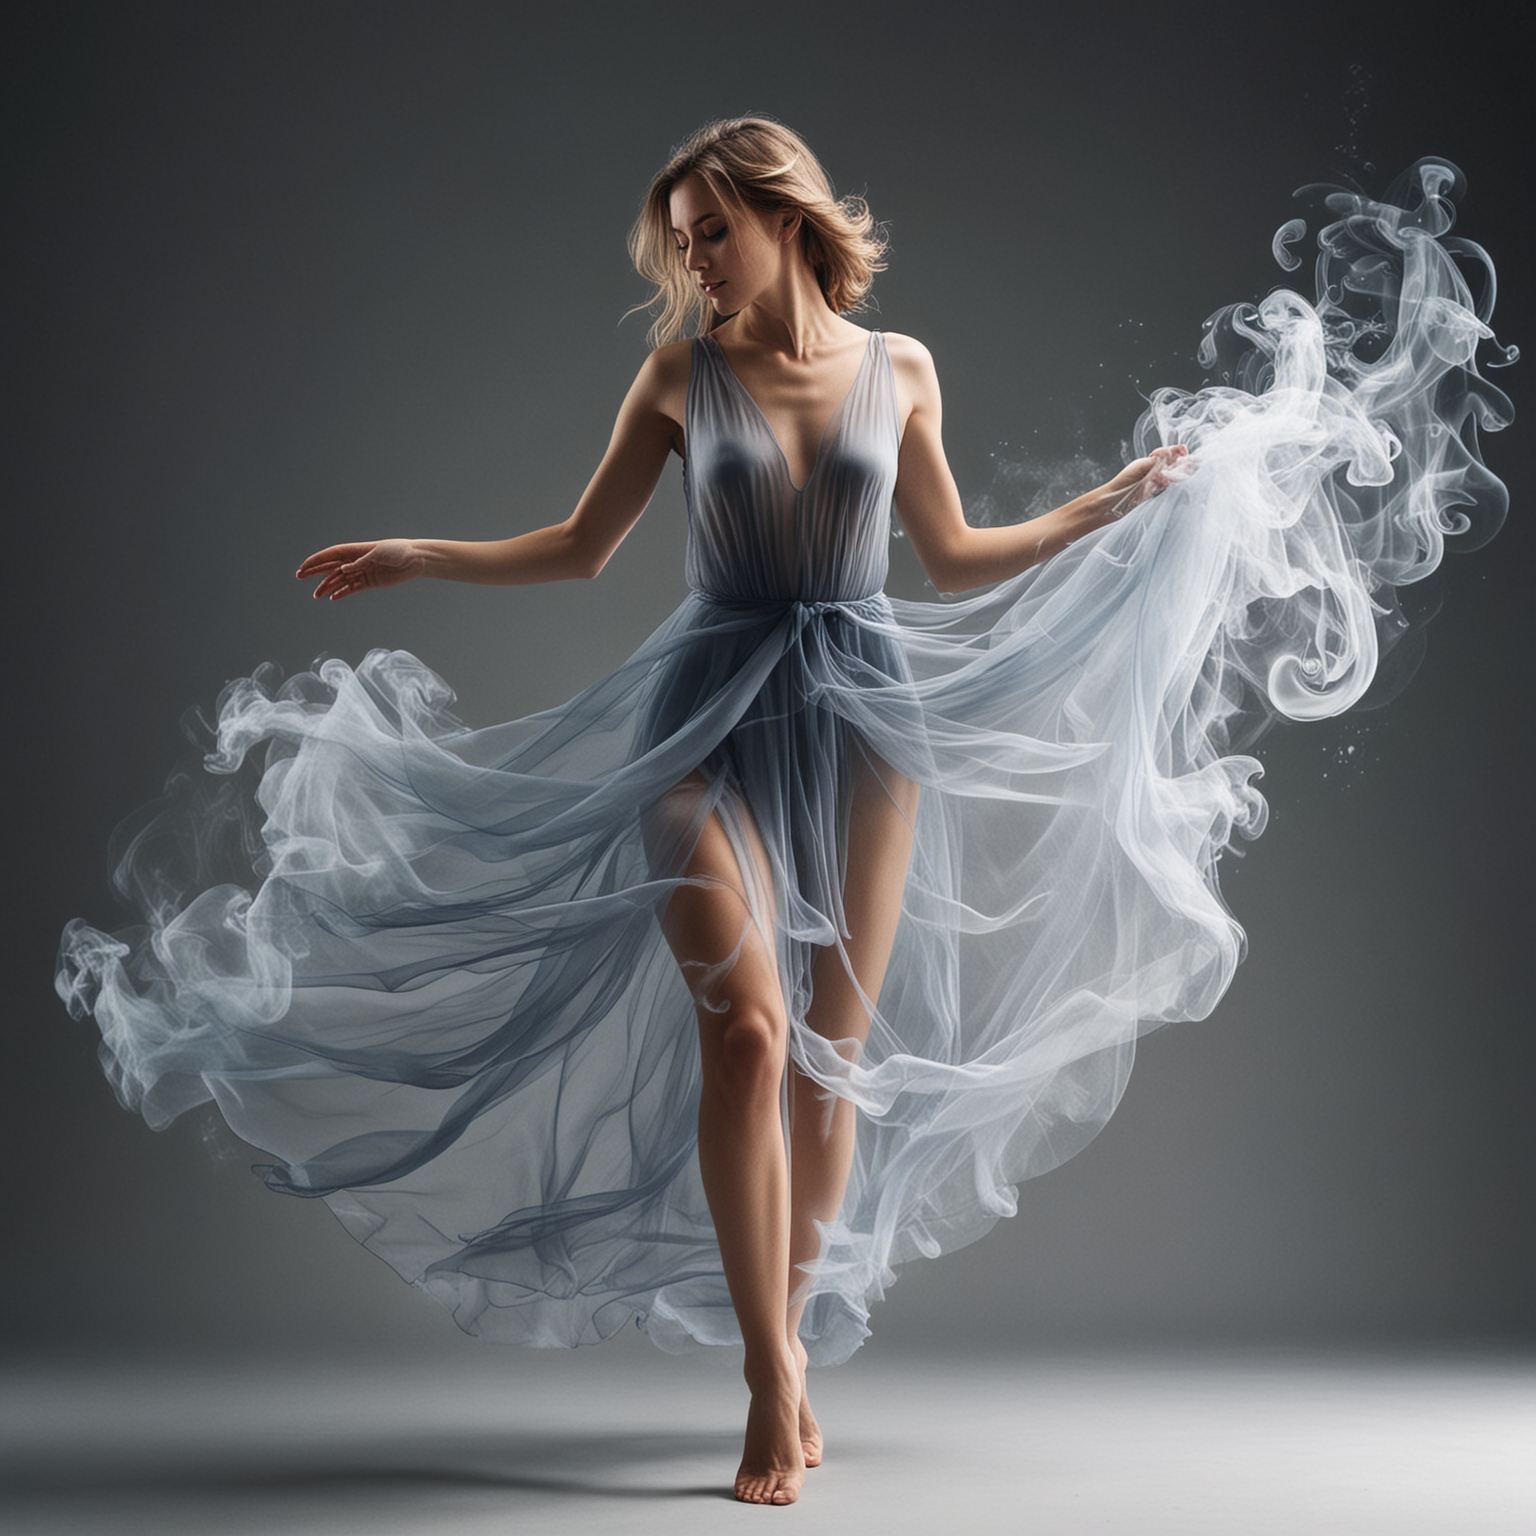 Graceful Dancing Girl in Ethereal Smoke Dress